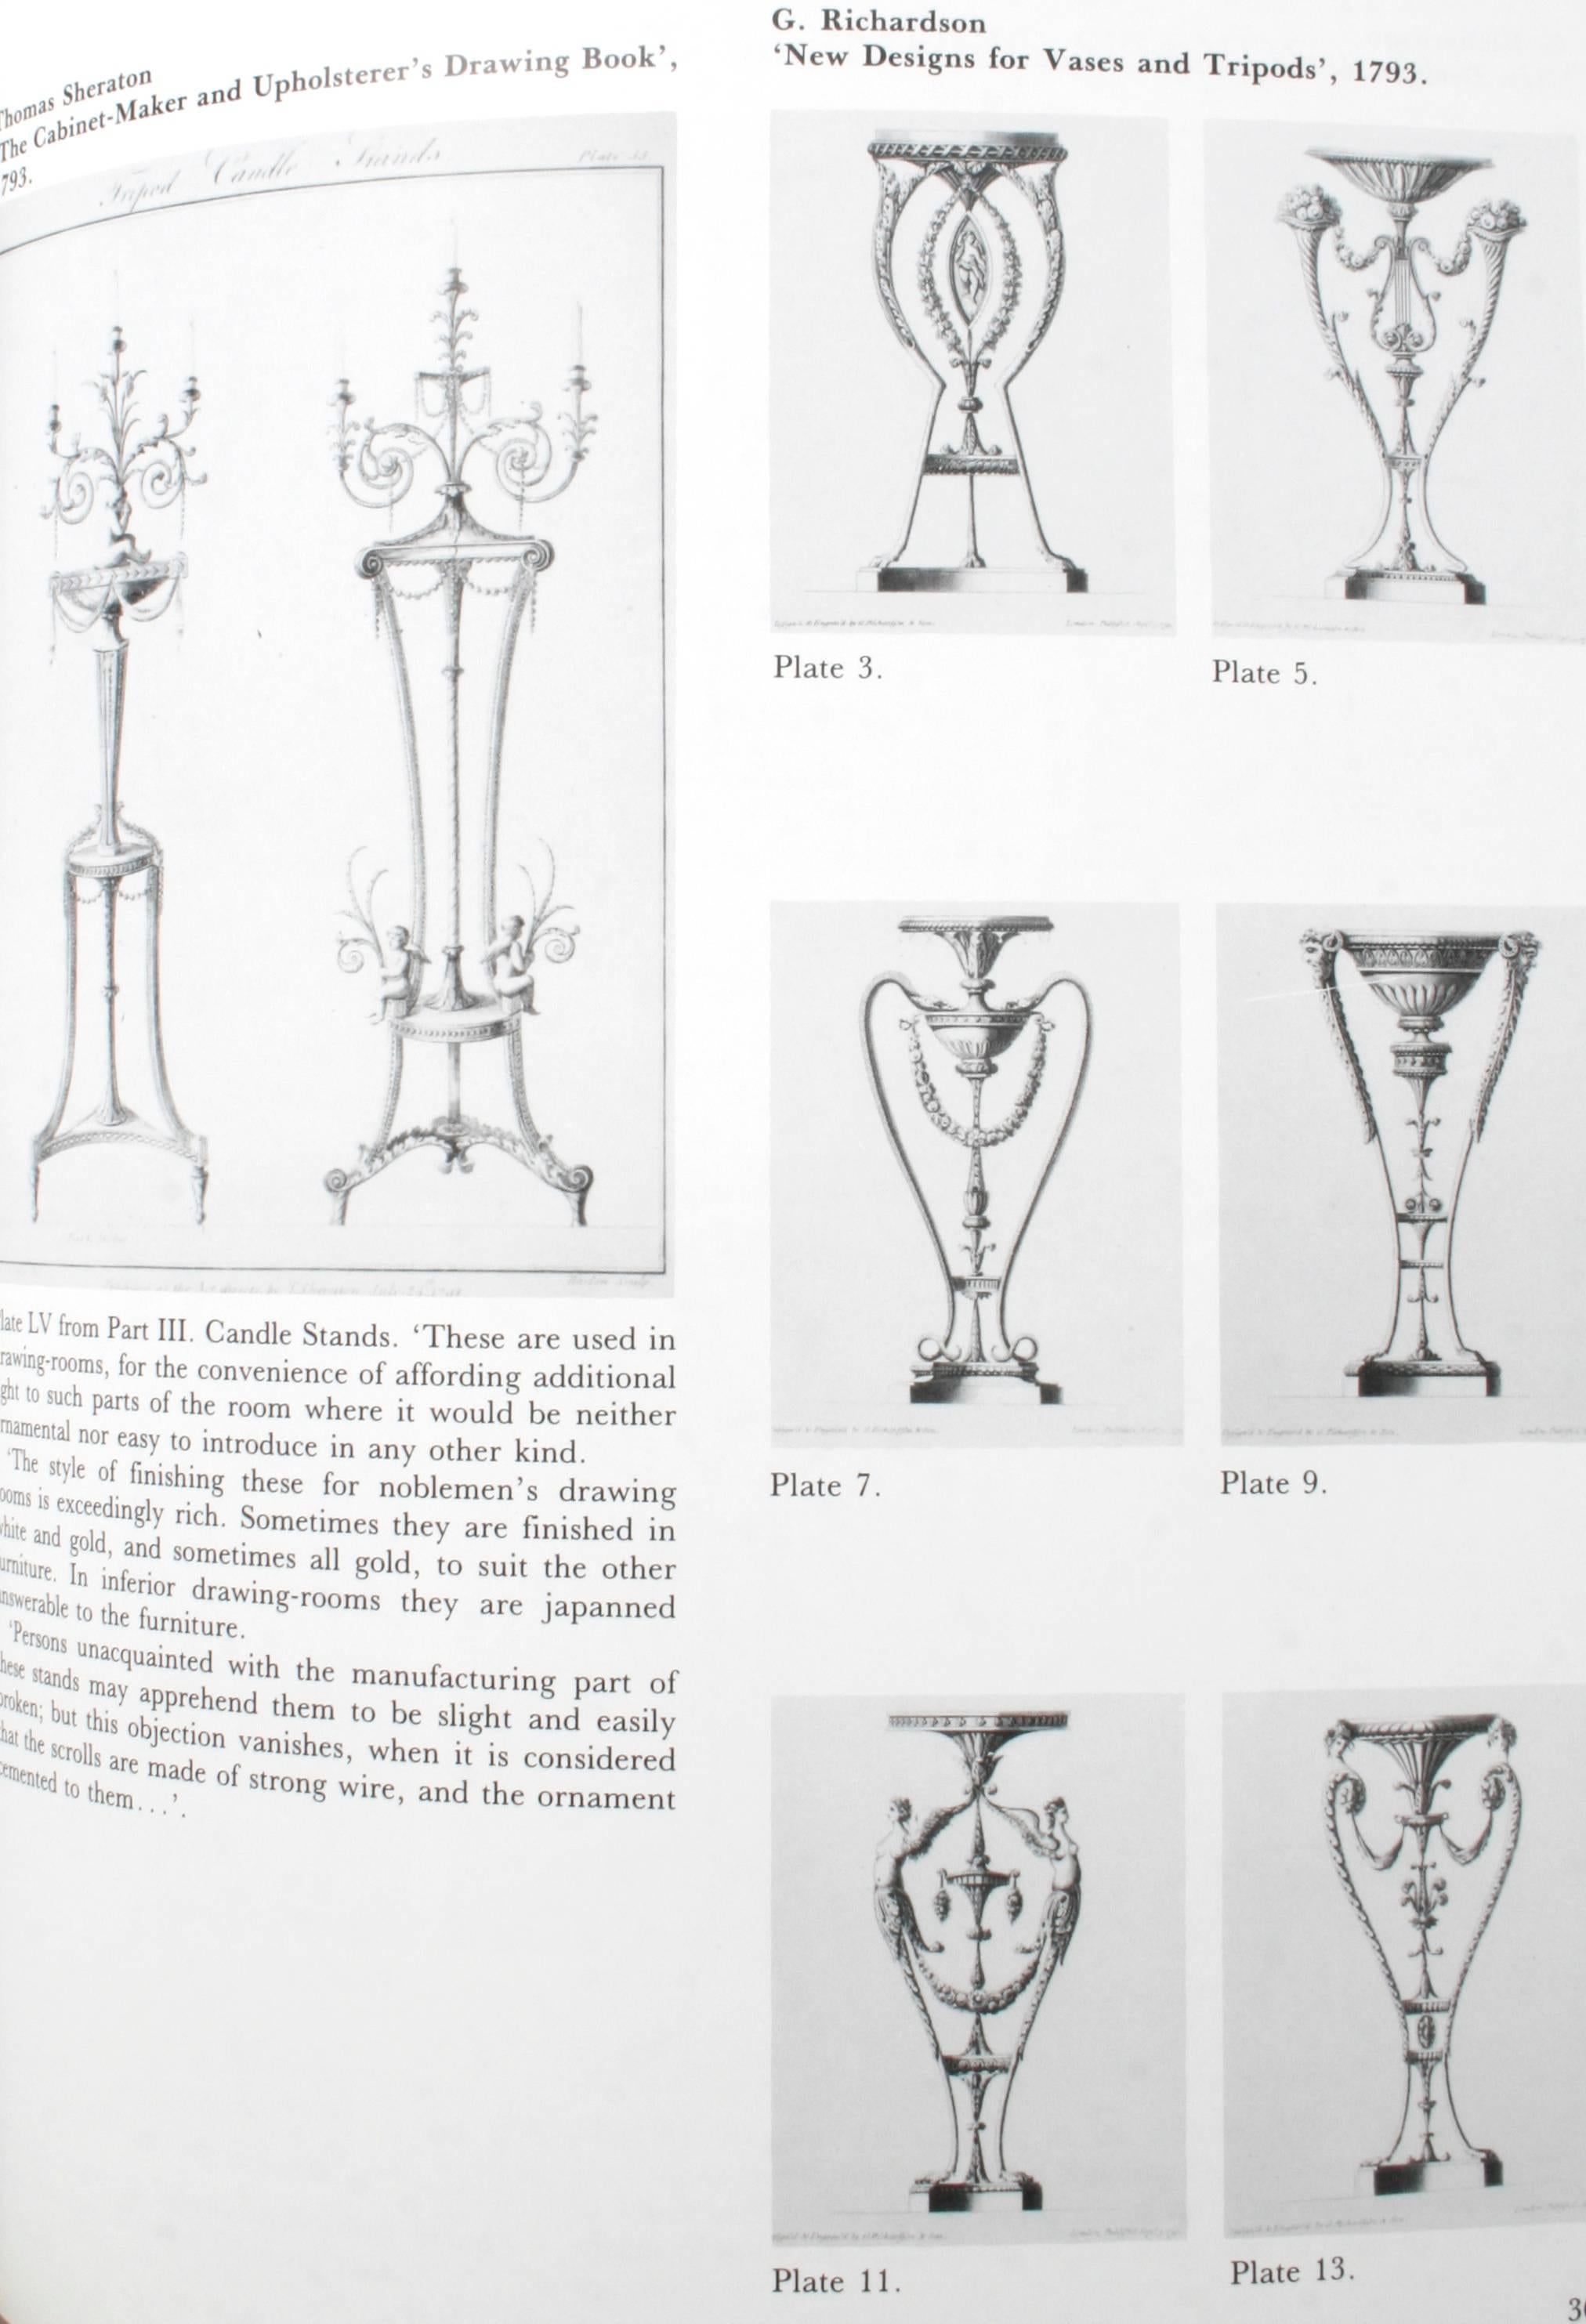 Paper Pictorial Dictionary of British 18th Century Furniture Design